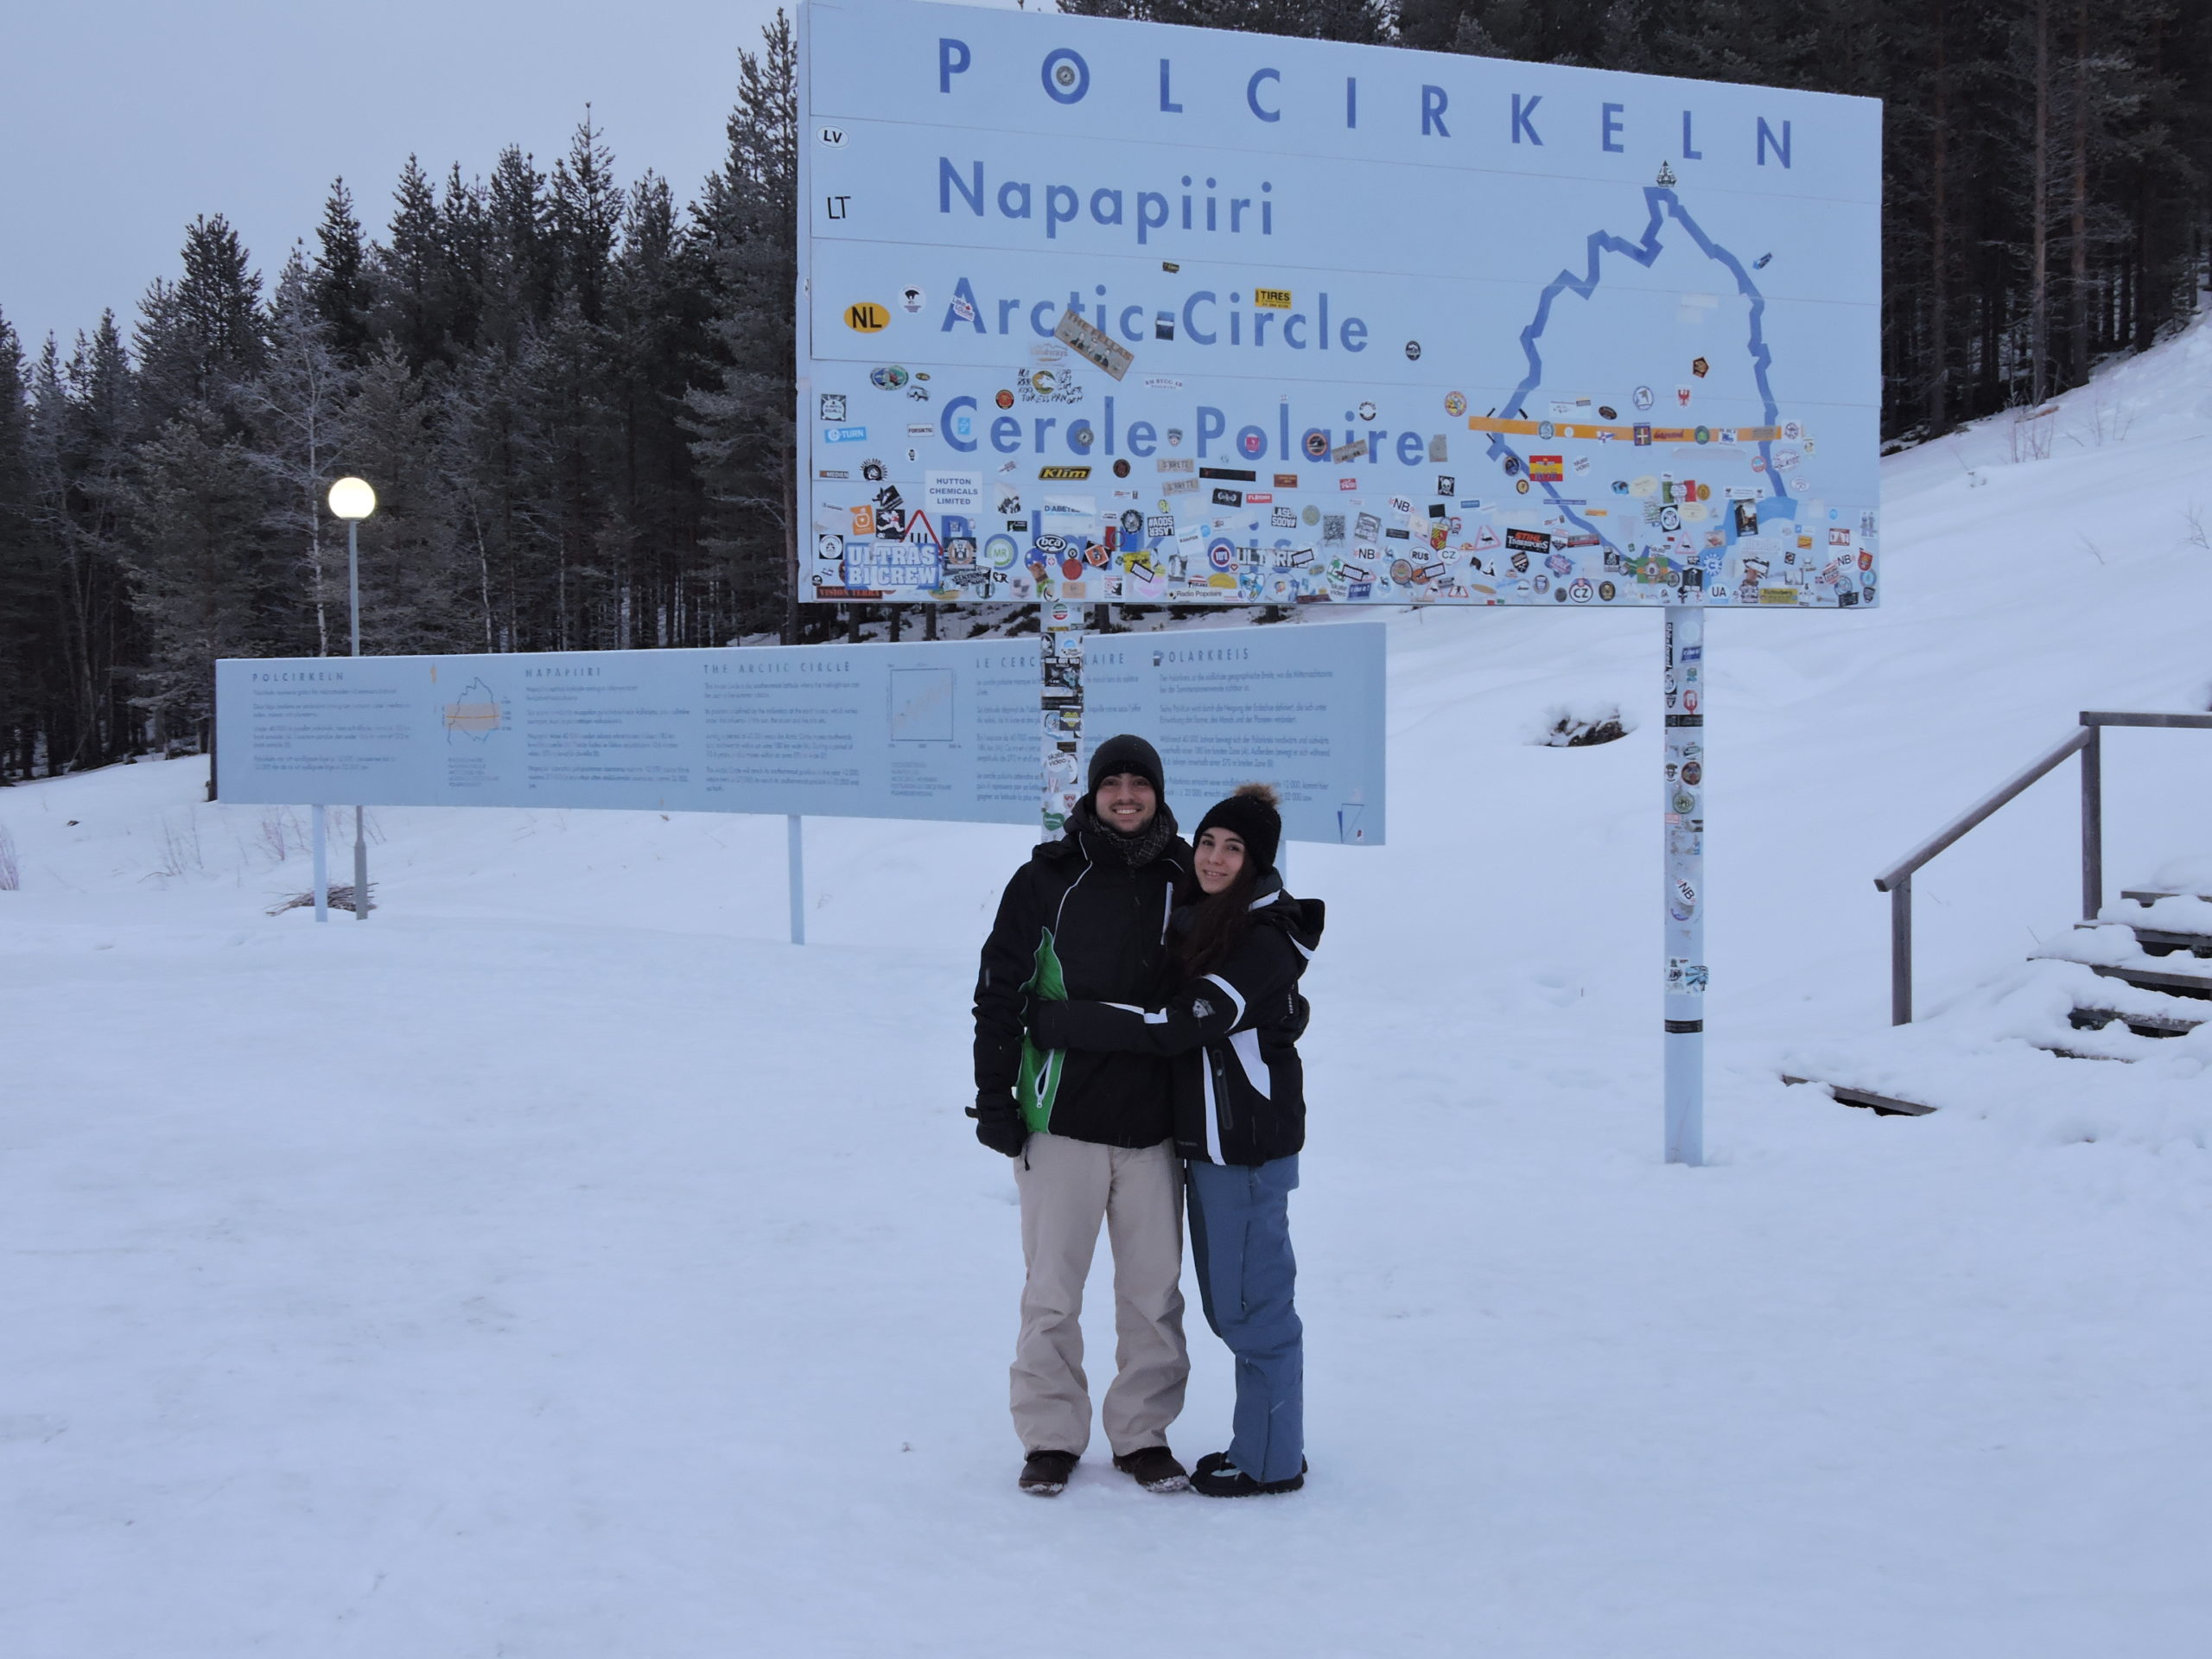 Polar Circle Sign in Lapland Sweden